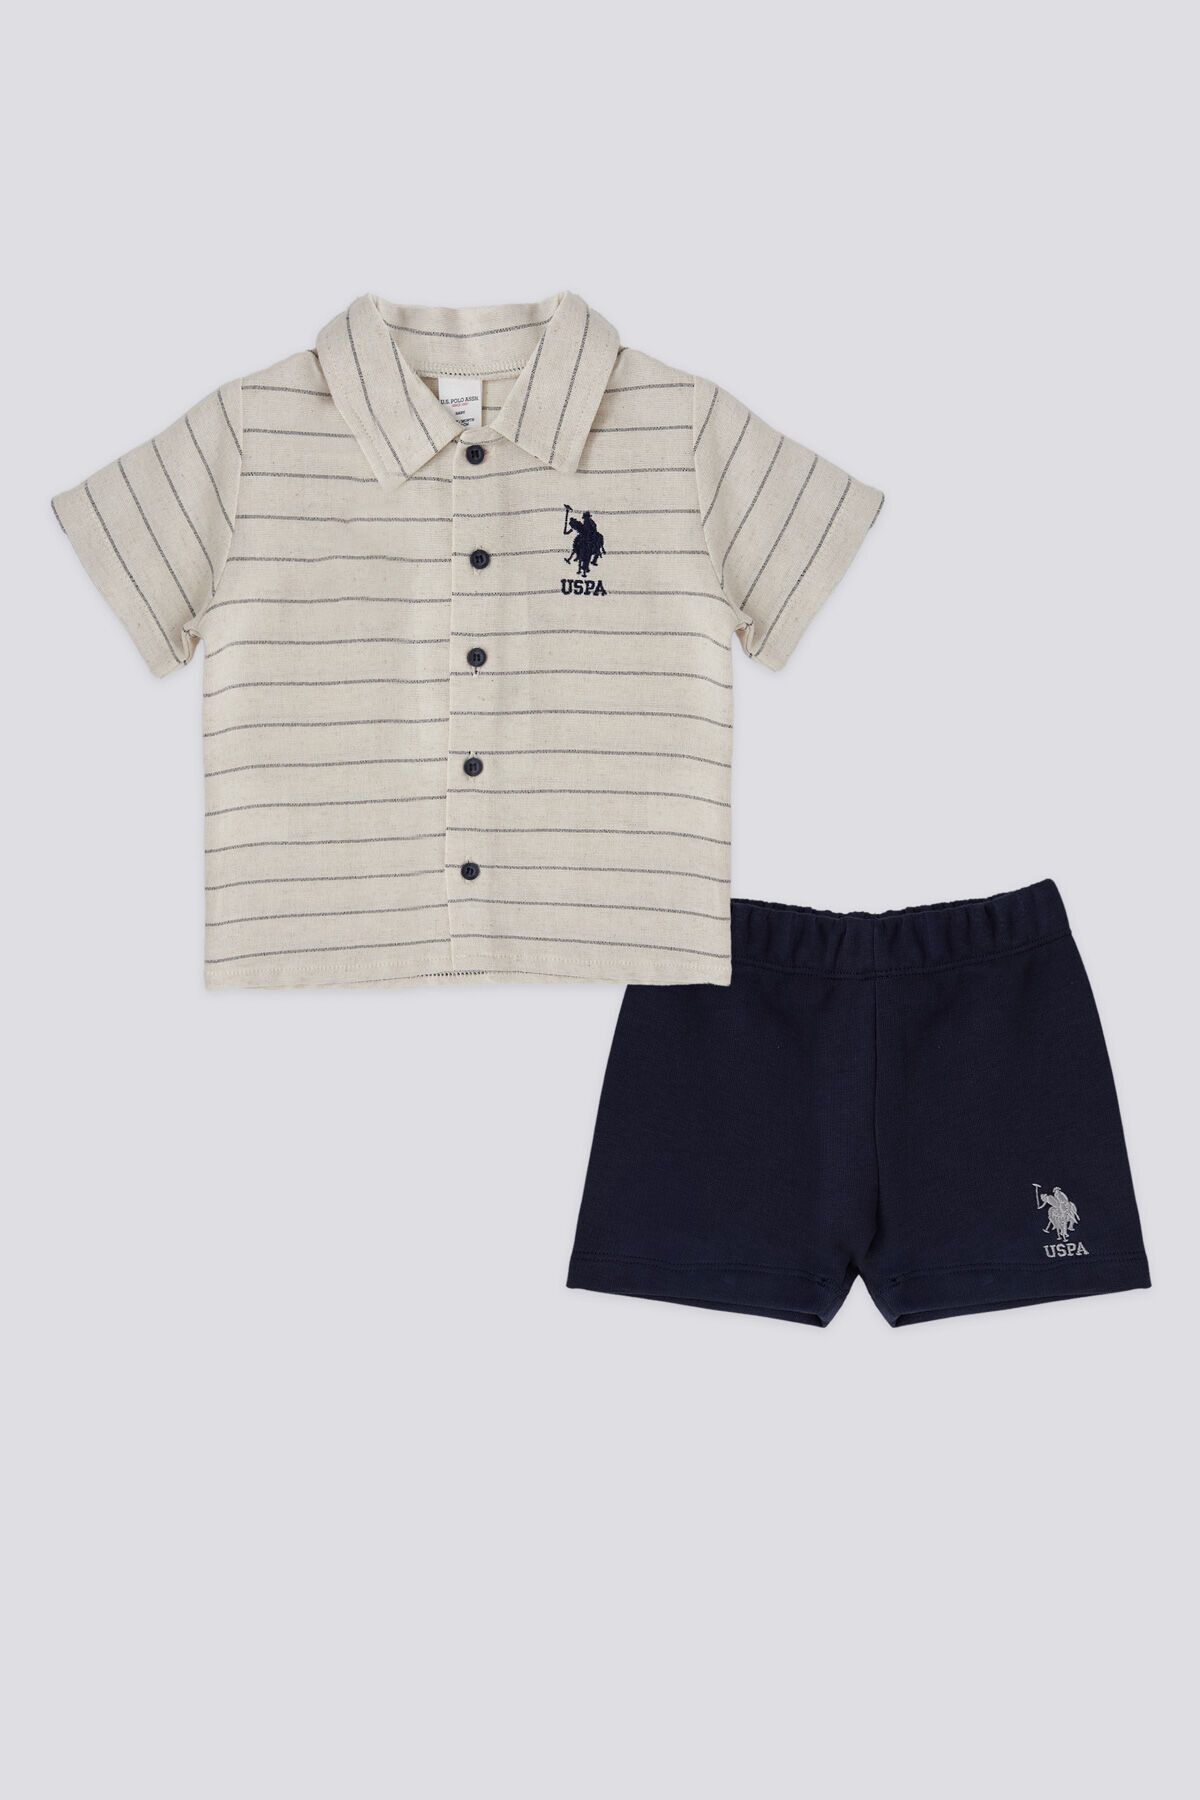 U.S. Polo Assn. Striped Shirt Lacivert Erkek Bebek Takımı